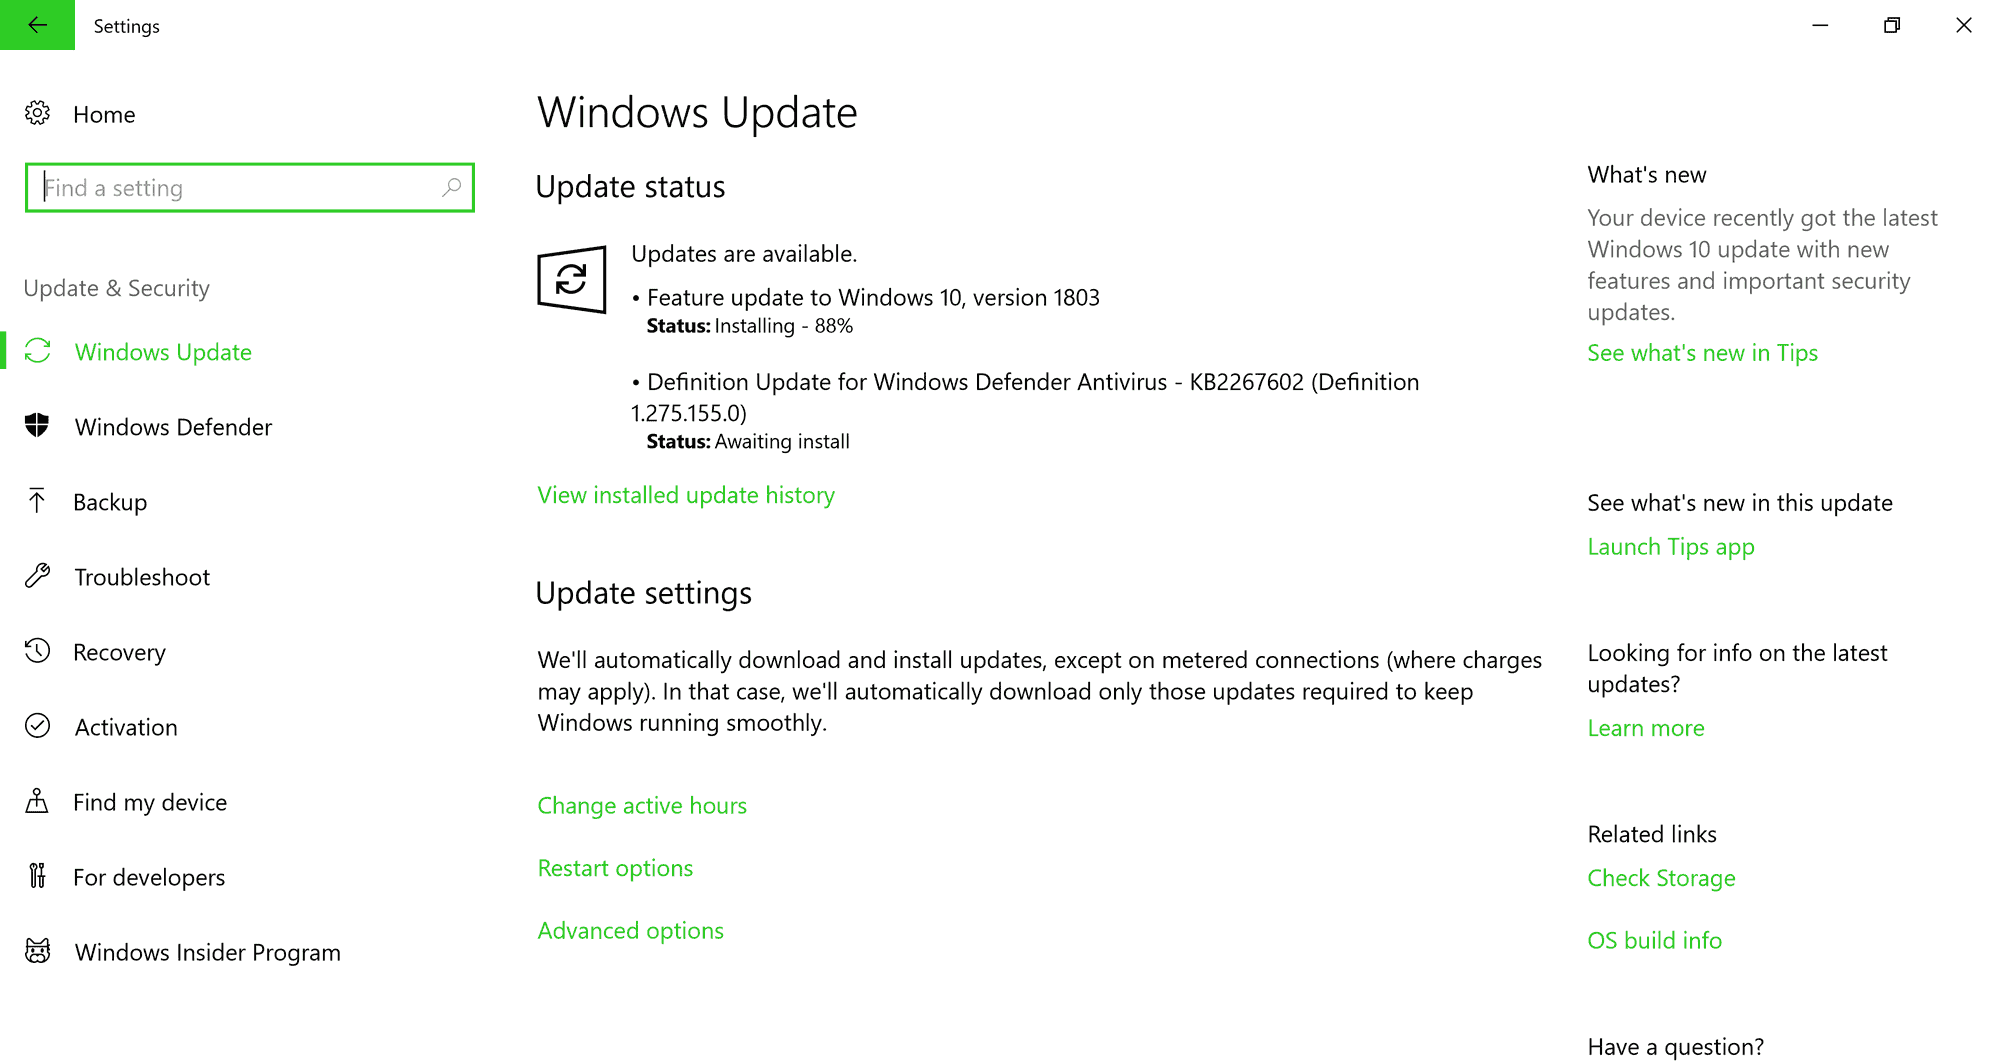 my windows 10 version 1803 update is not installing e10a9a59-5fcf-4758-927a-b15837de23fc?upload=true.png